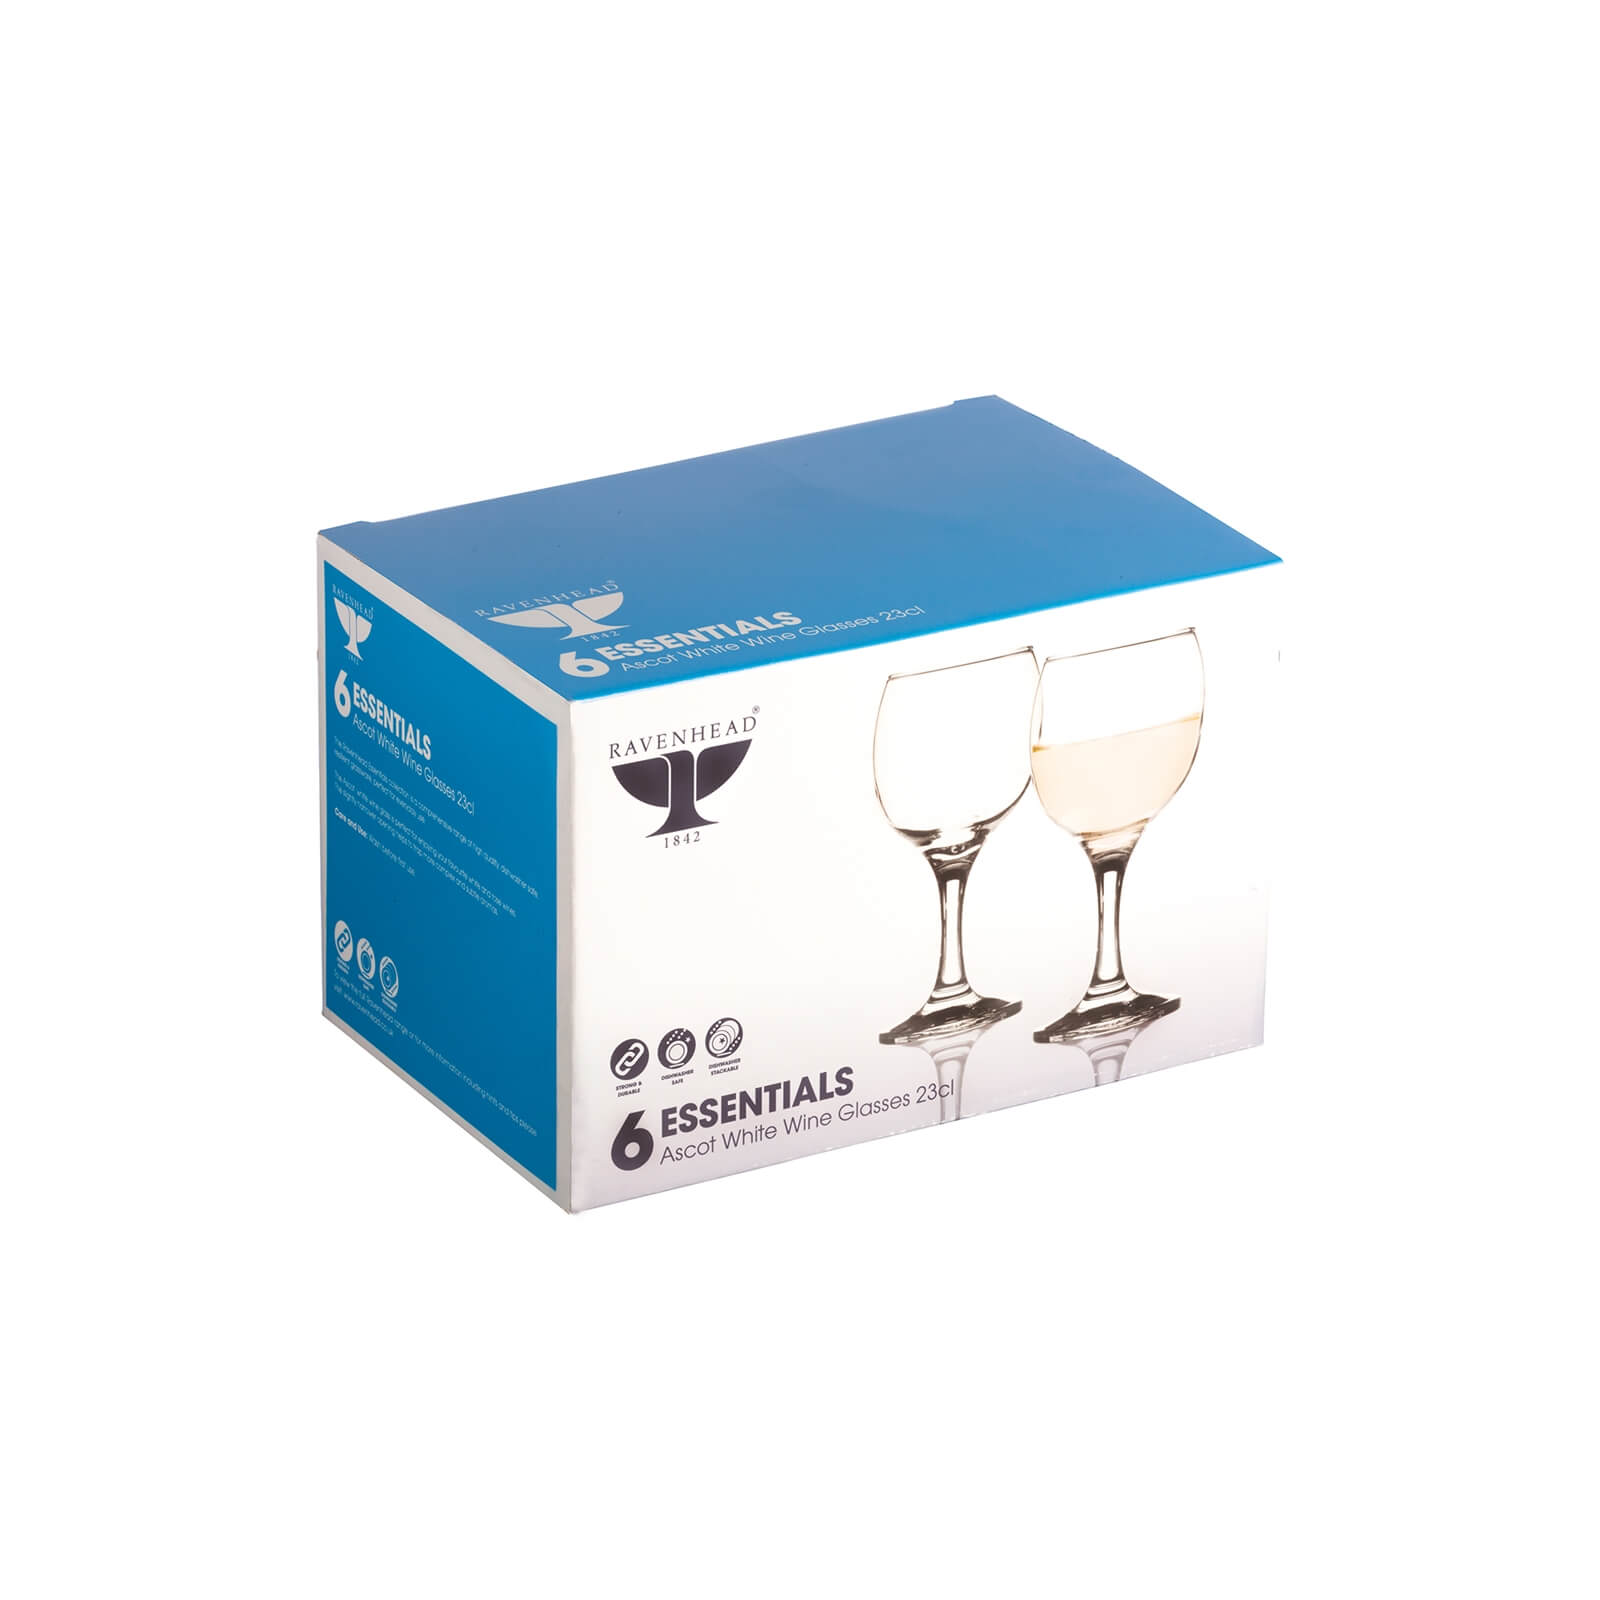 Essentials Ascot 23cl White Wine Glasses - Set of 6